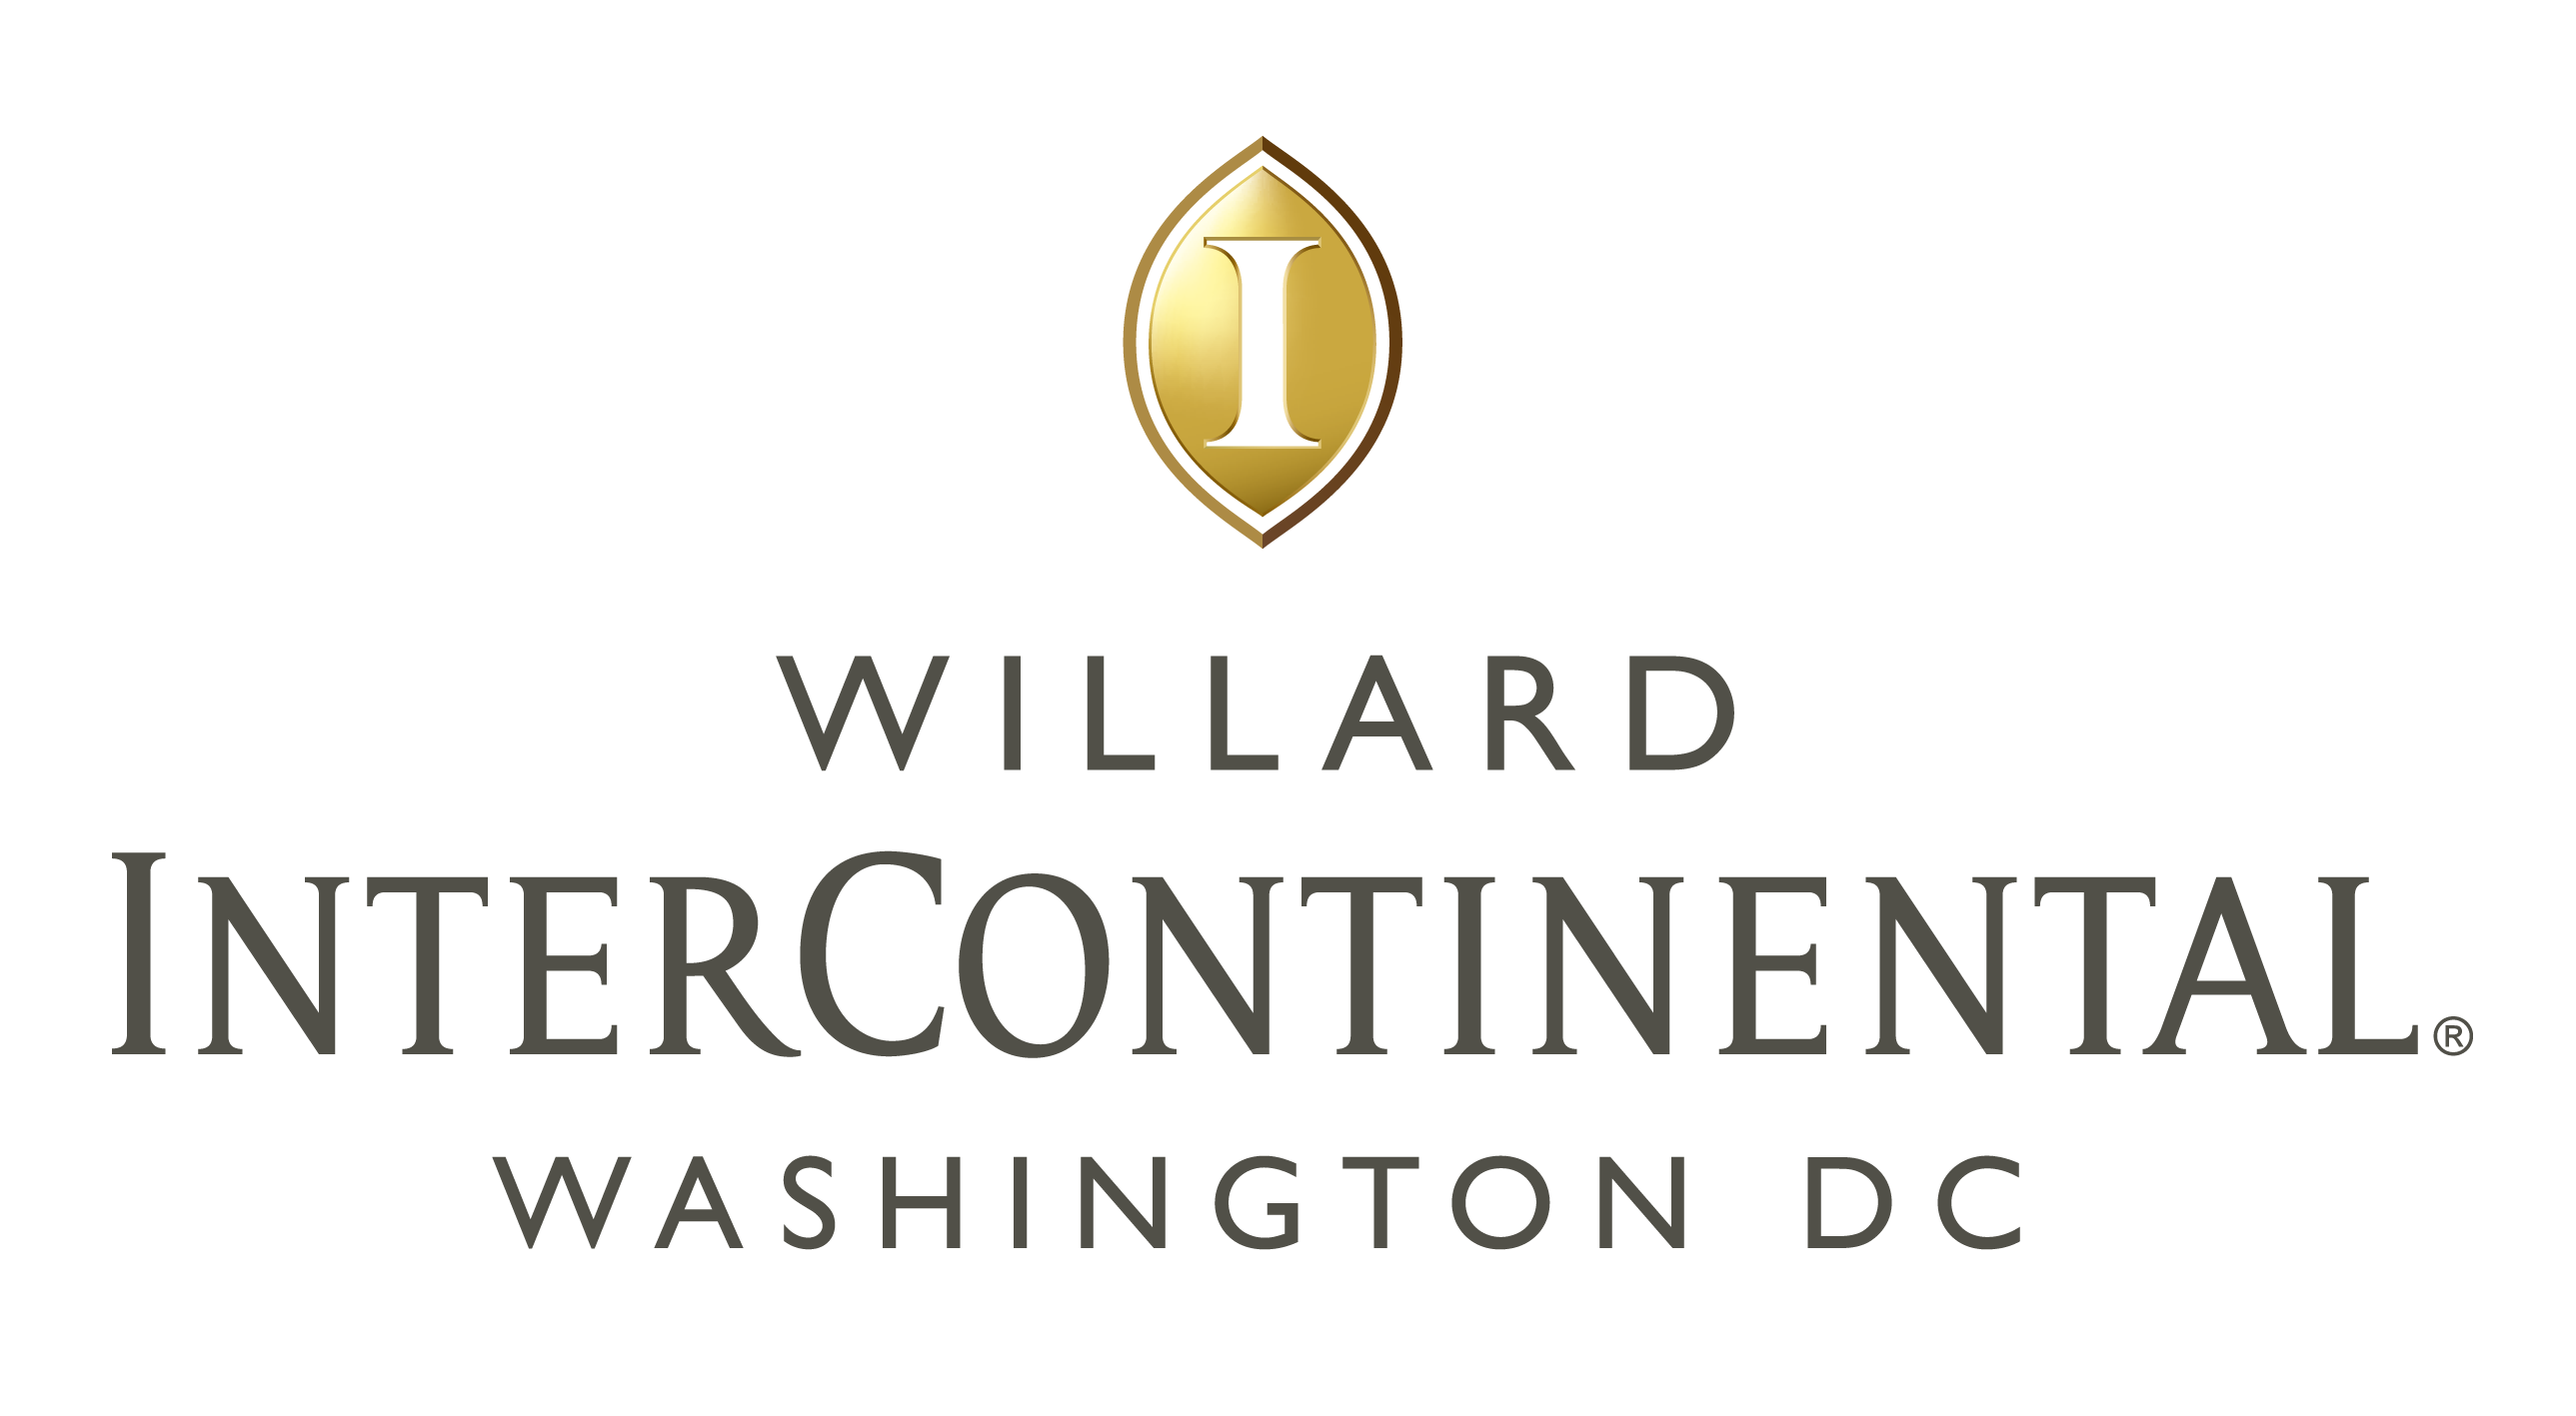 Willard InterContinental, Washington D.C. logo